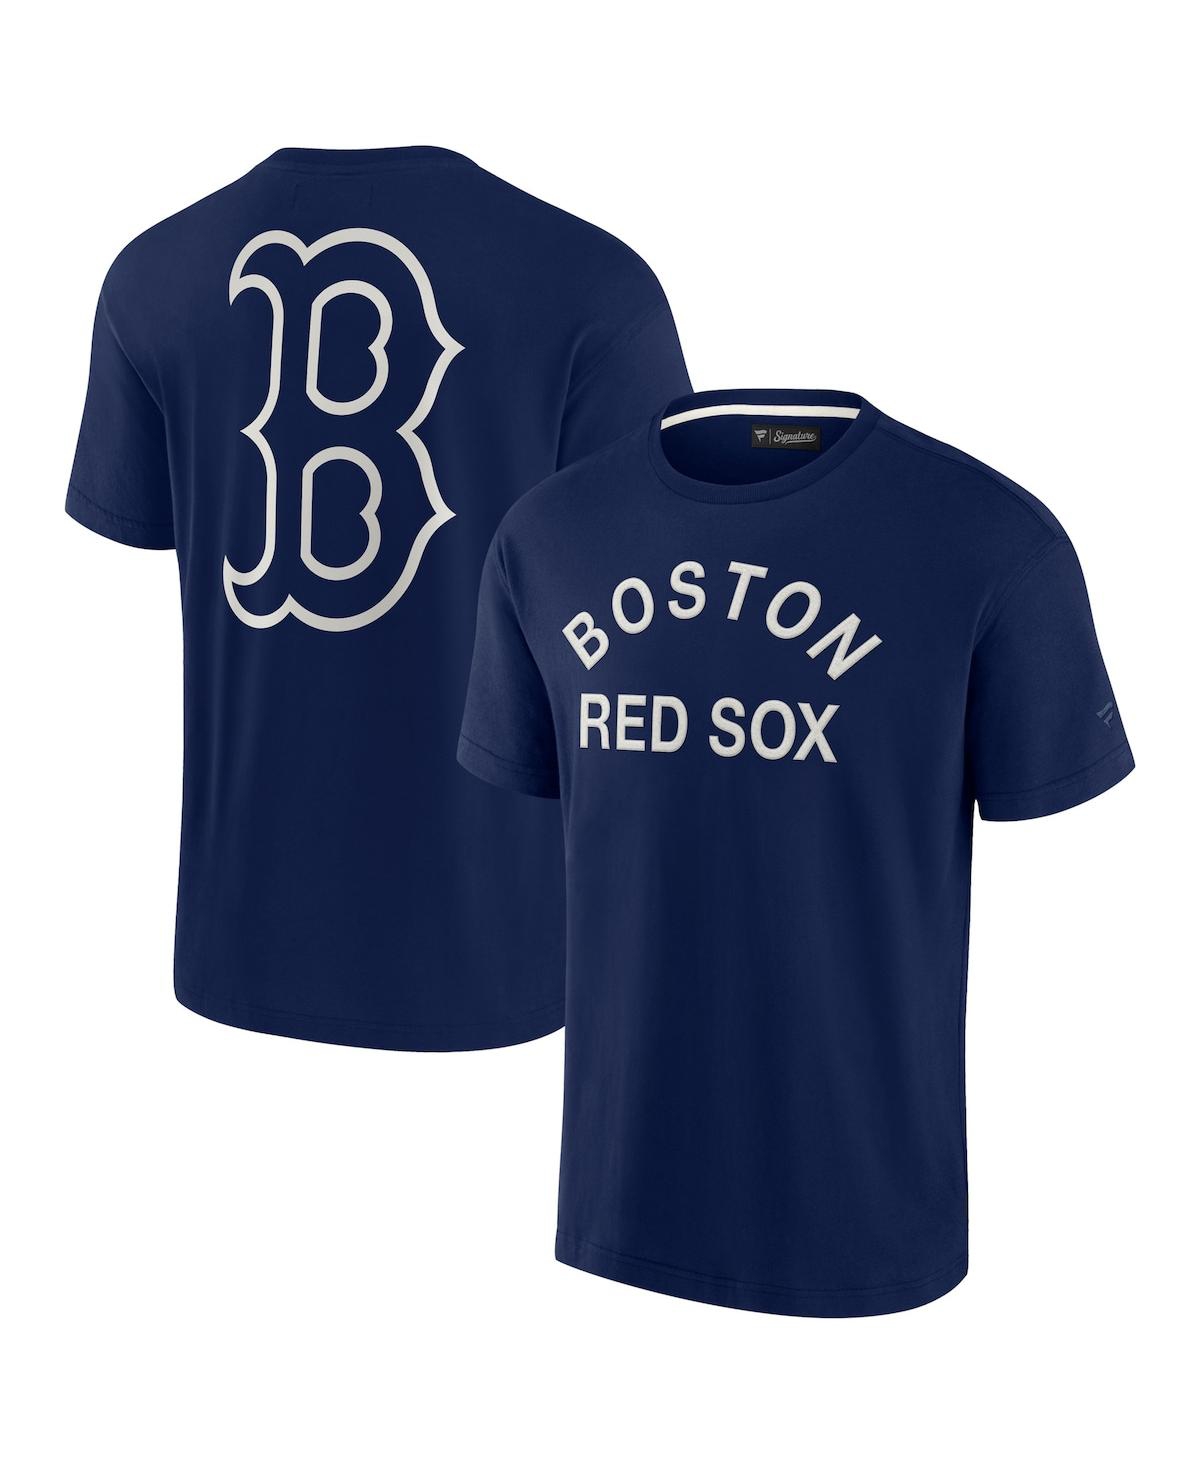 Shop Fanatics Signature Men's And Women's  Navy Boston Red Sox Super Soft Short Sleeve T-shirt